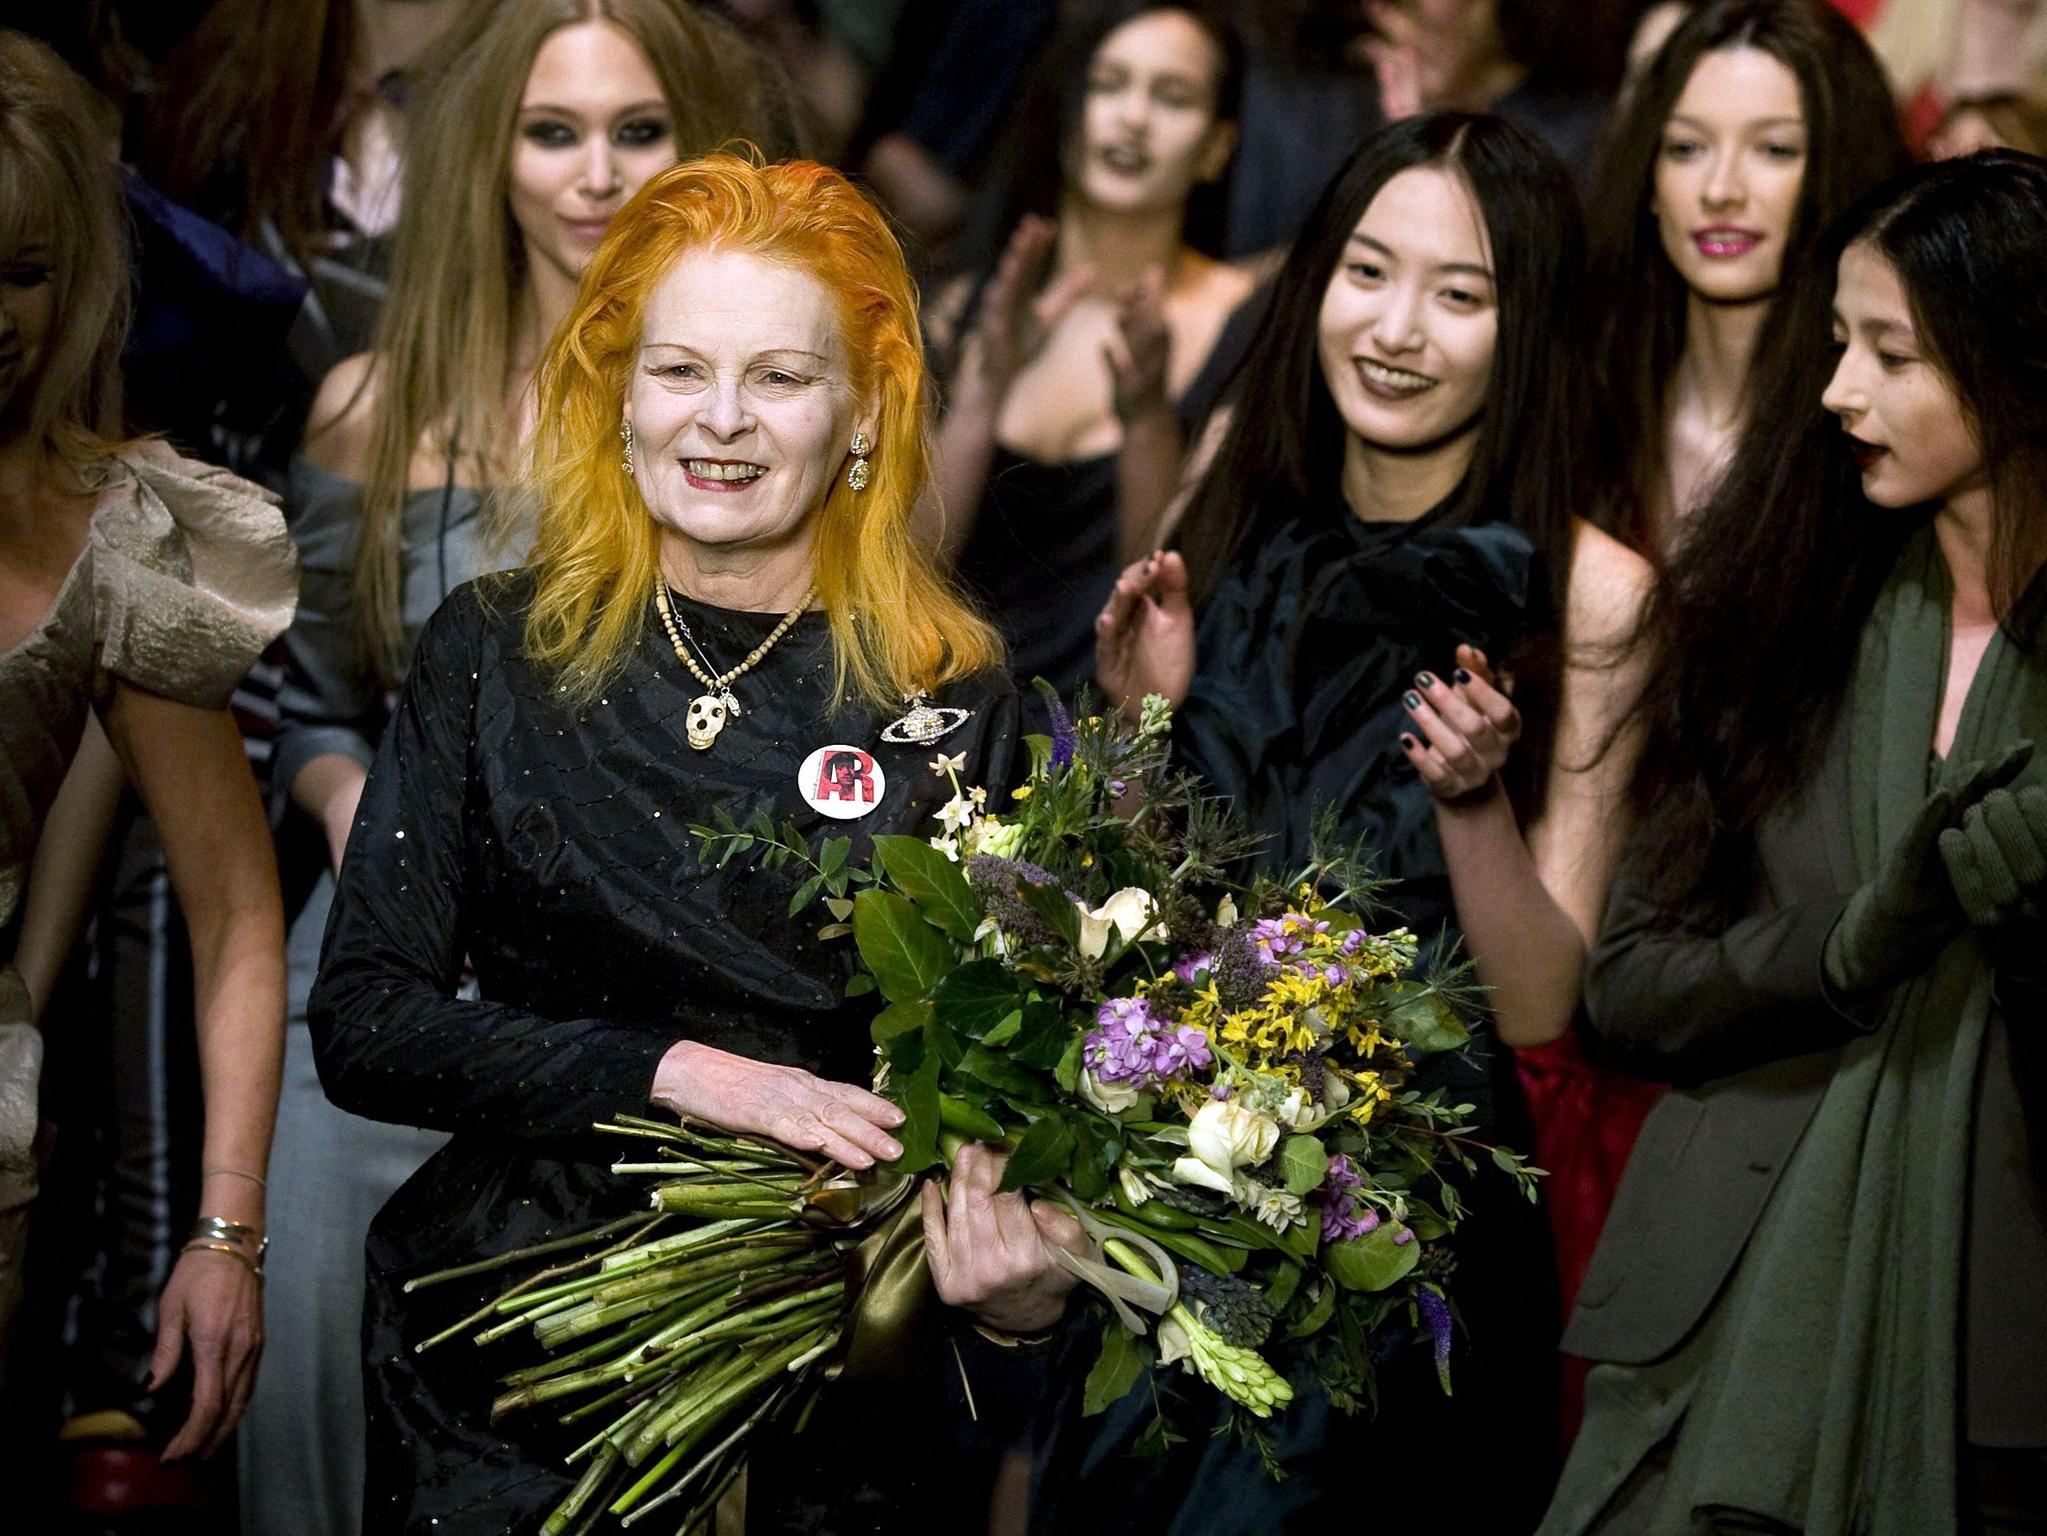 Vivienne Westwood, Fashion Designer And Punk Pioneer, Dies At 81